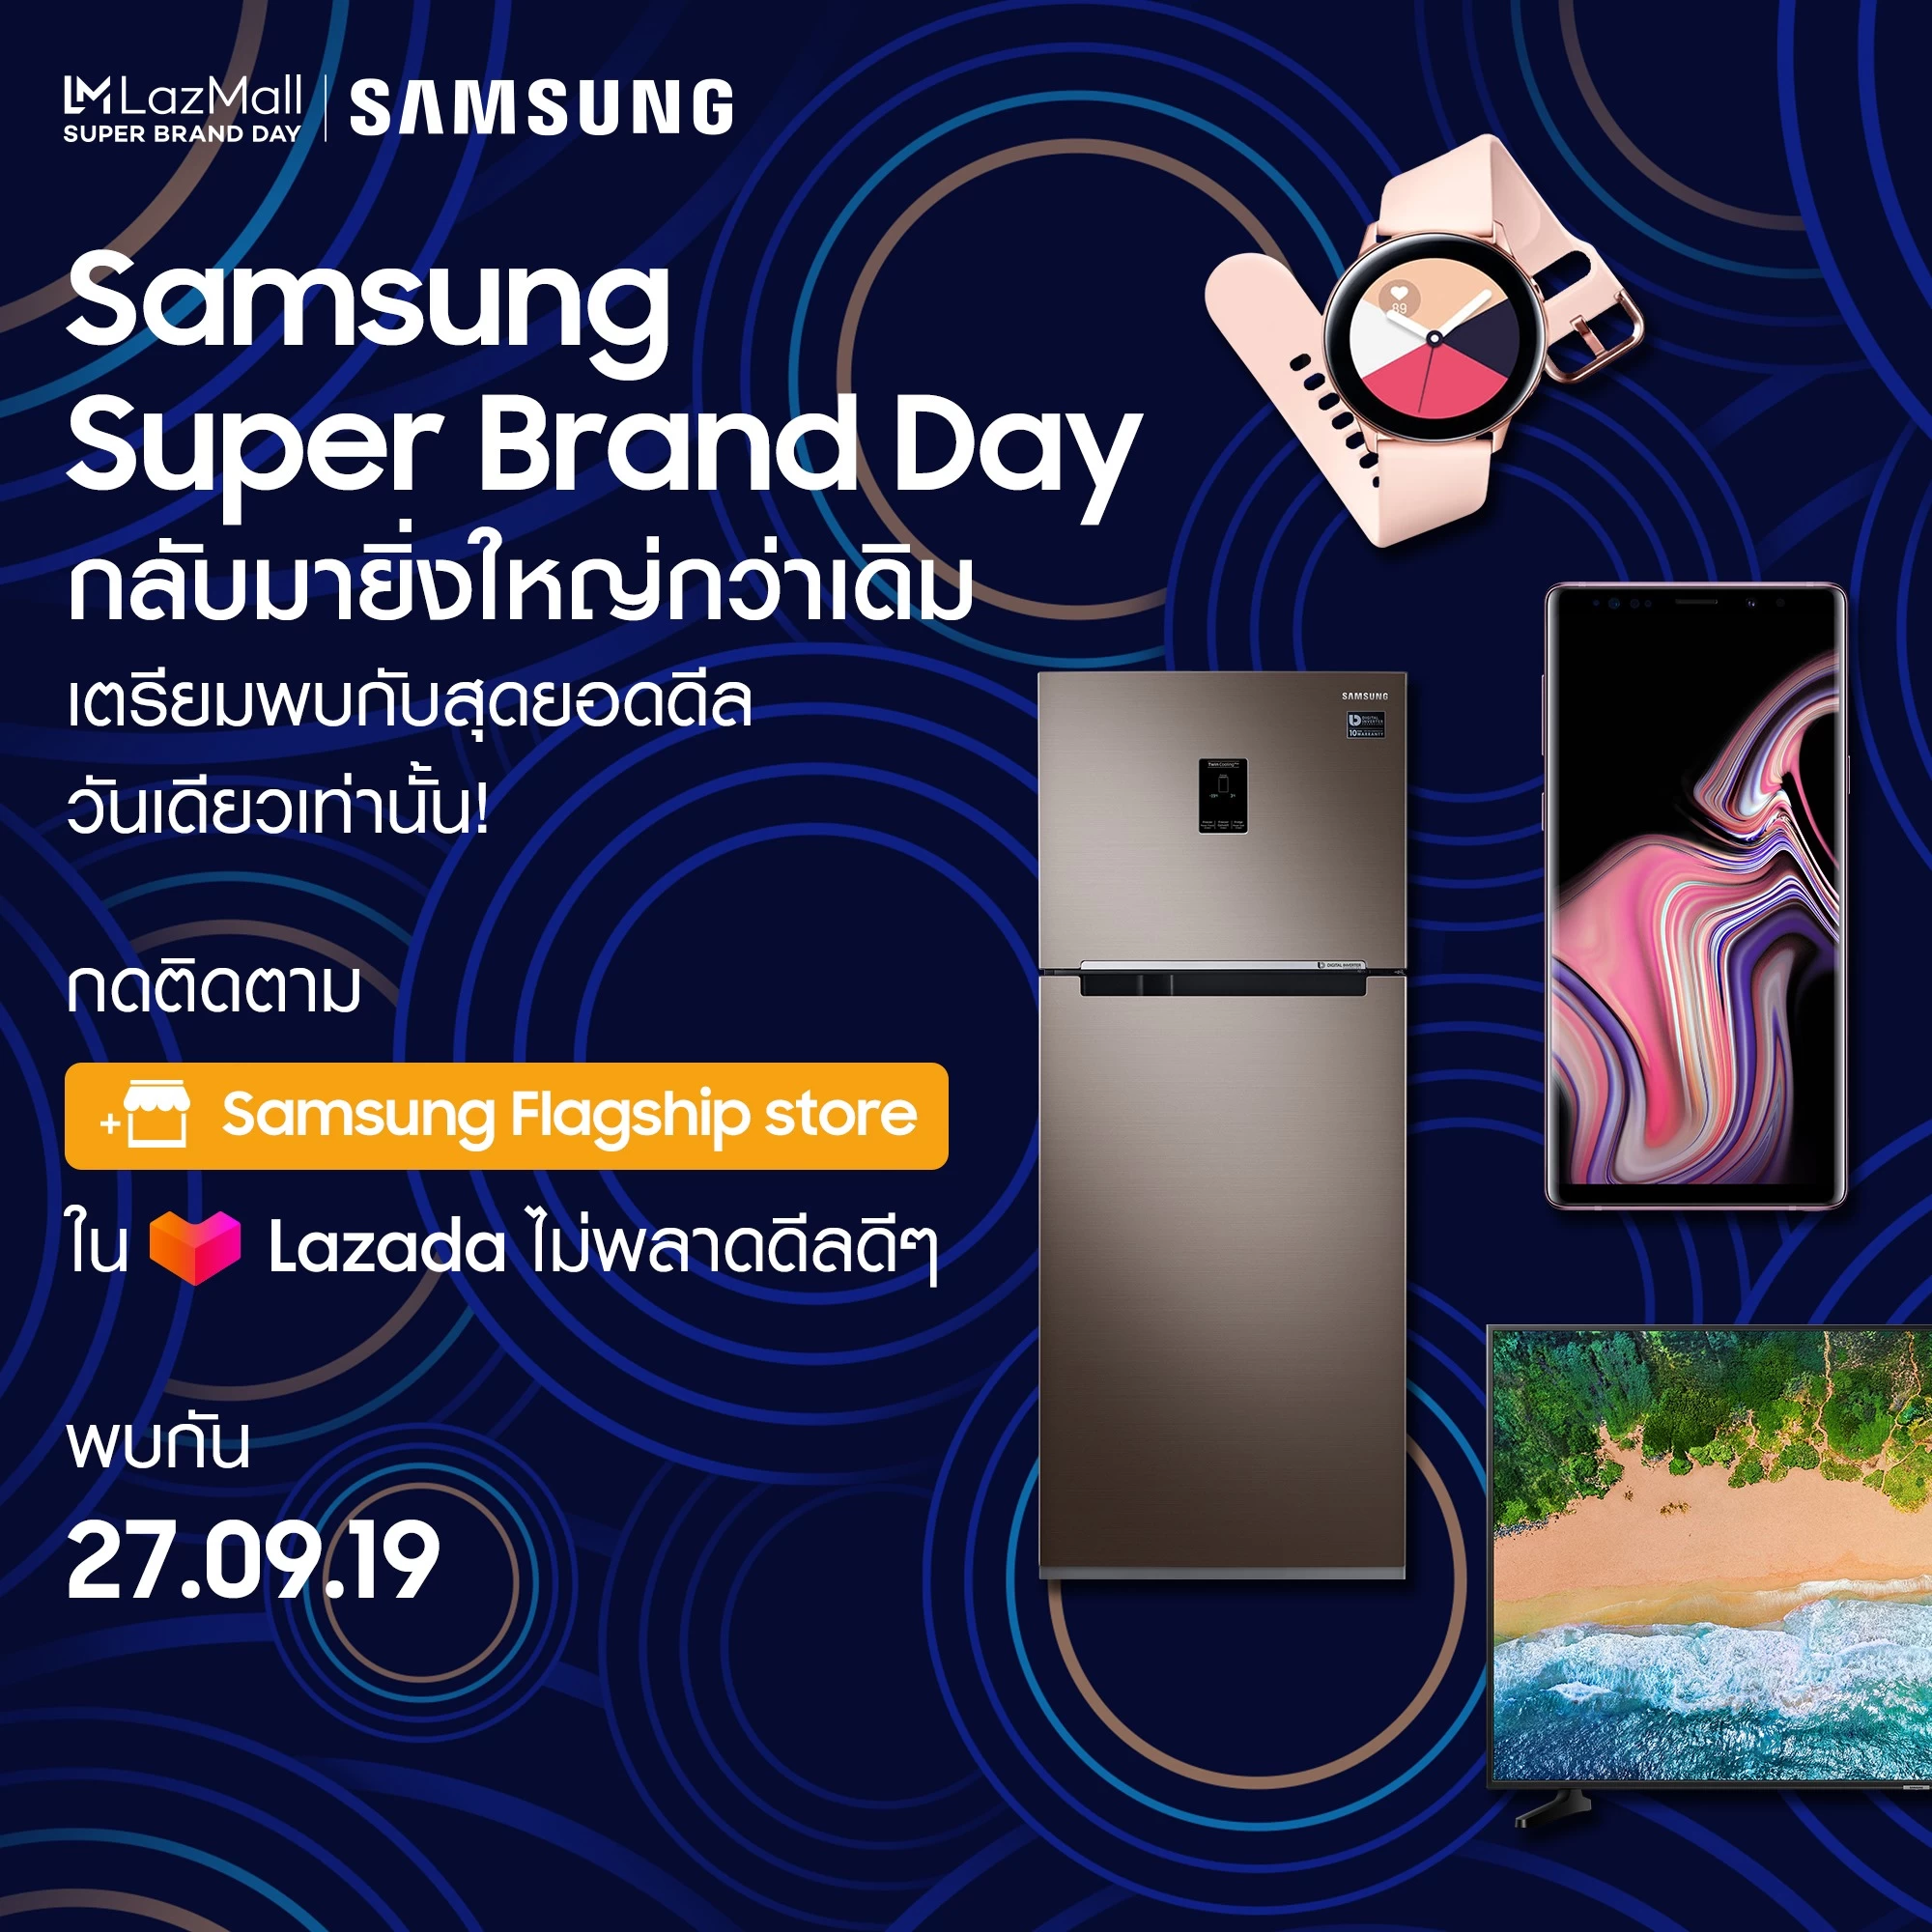 | Samsung Flagship Store | ซัมซุง จับมือ ‘ลาซาด้า’ ส่งแคมเปญ ‘ซัมซุงซูเปอร์แบรนด์เดย์’ราคาพิเศษในวันที่ 27 กันยา นี้